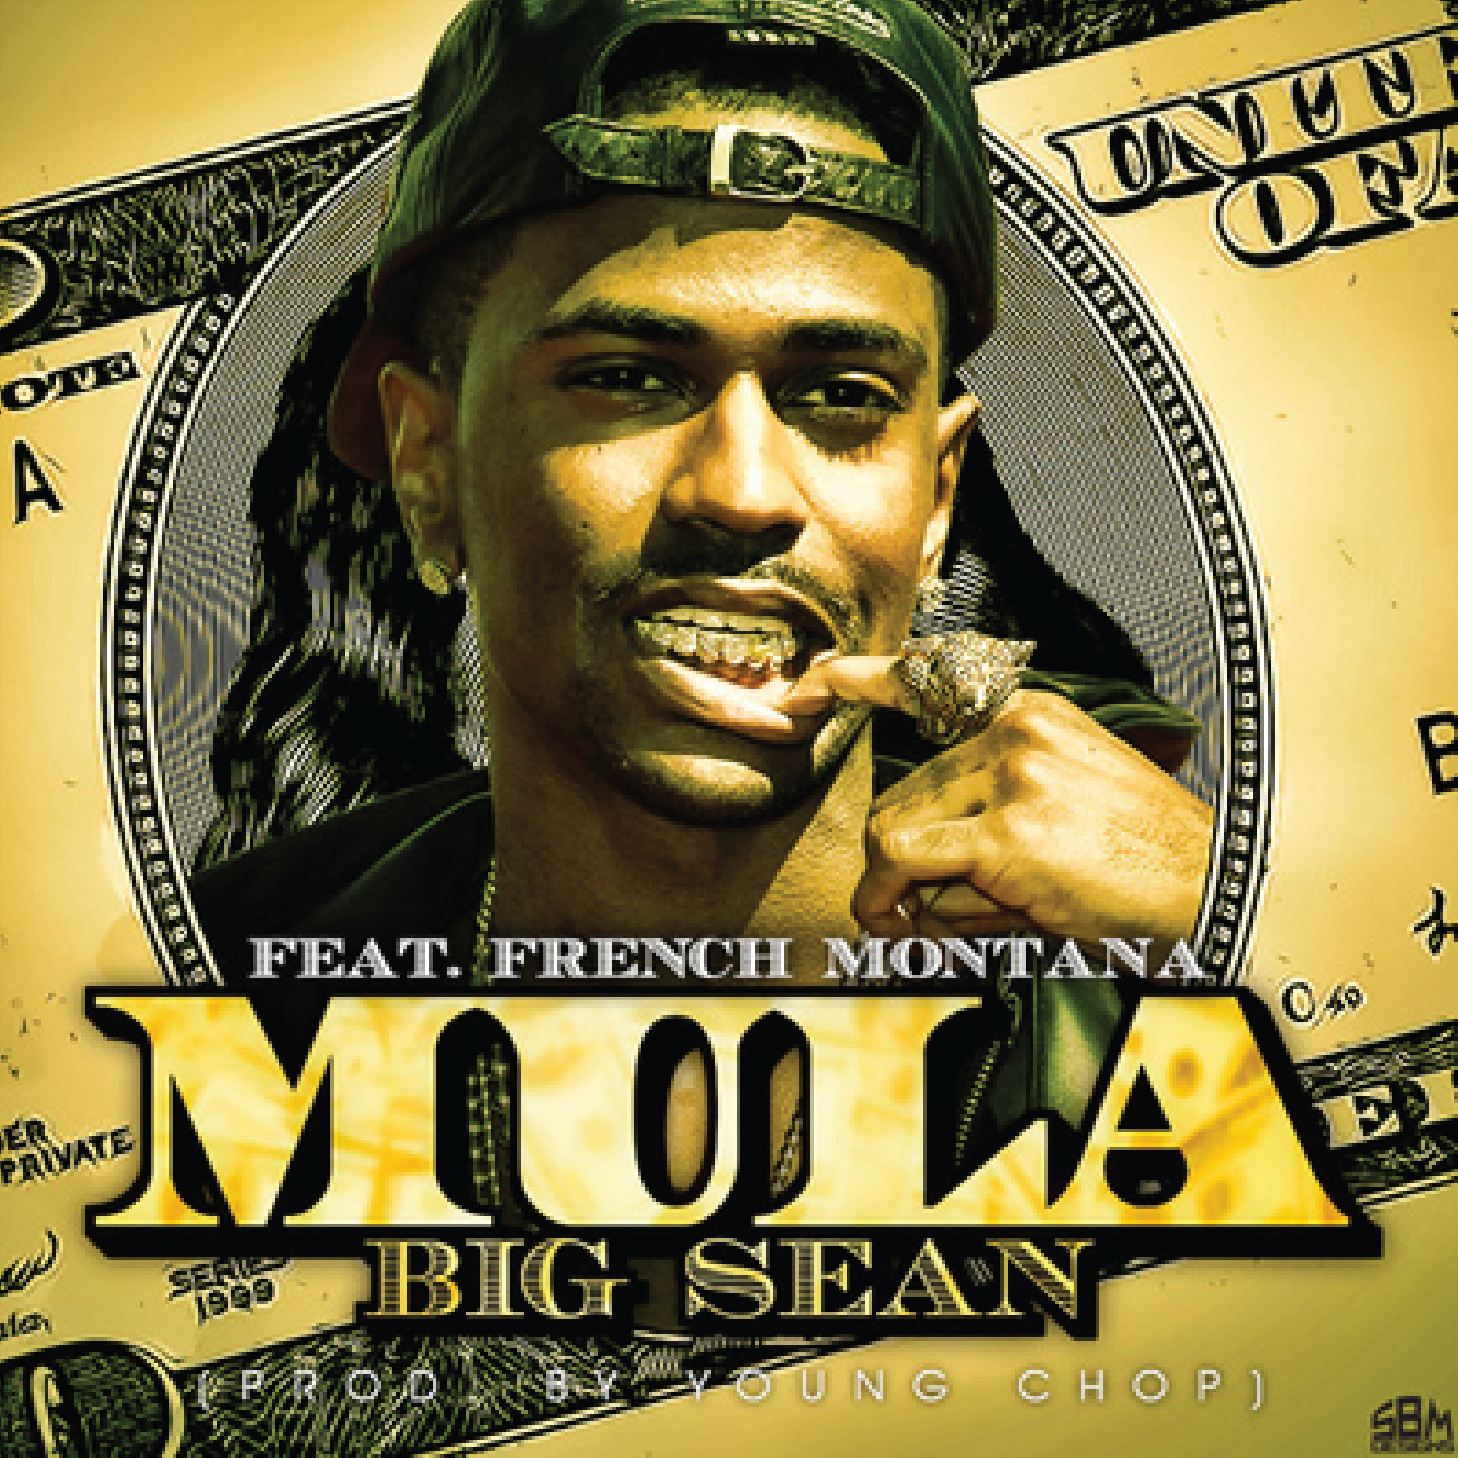 French montana ft. French Montana feat. Монтана рэп. French Montana MUZCLUB. Big Sean ft.